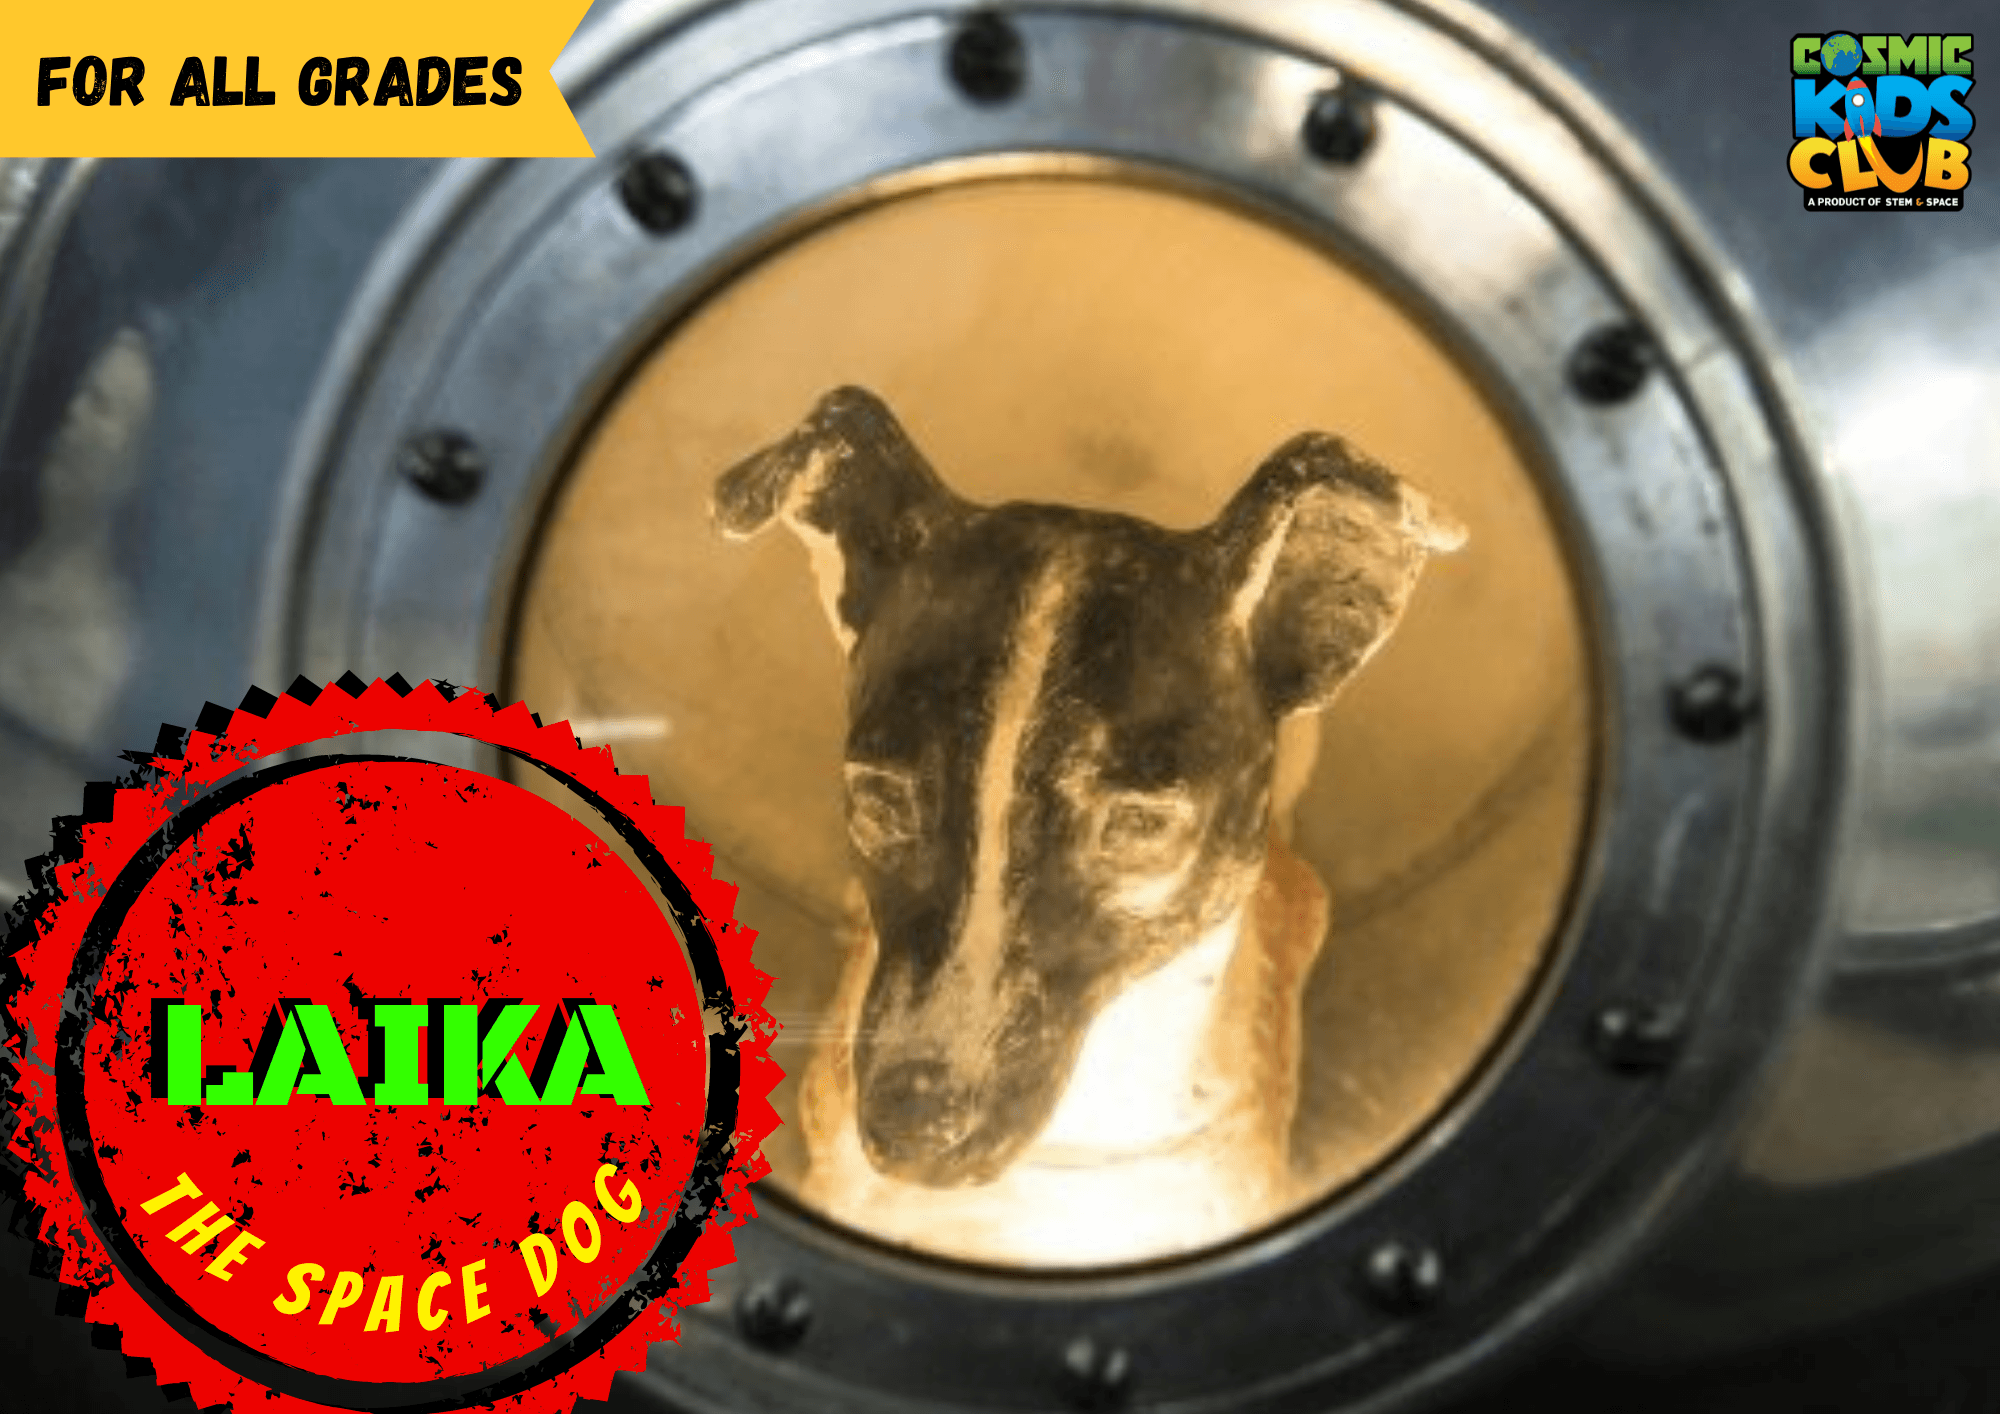 Laika - The Space Dog